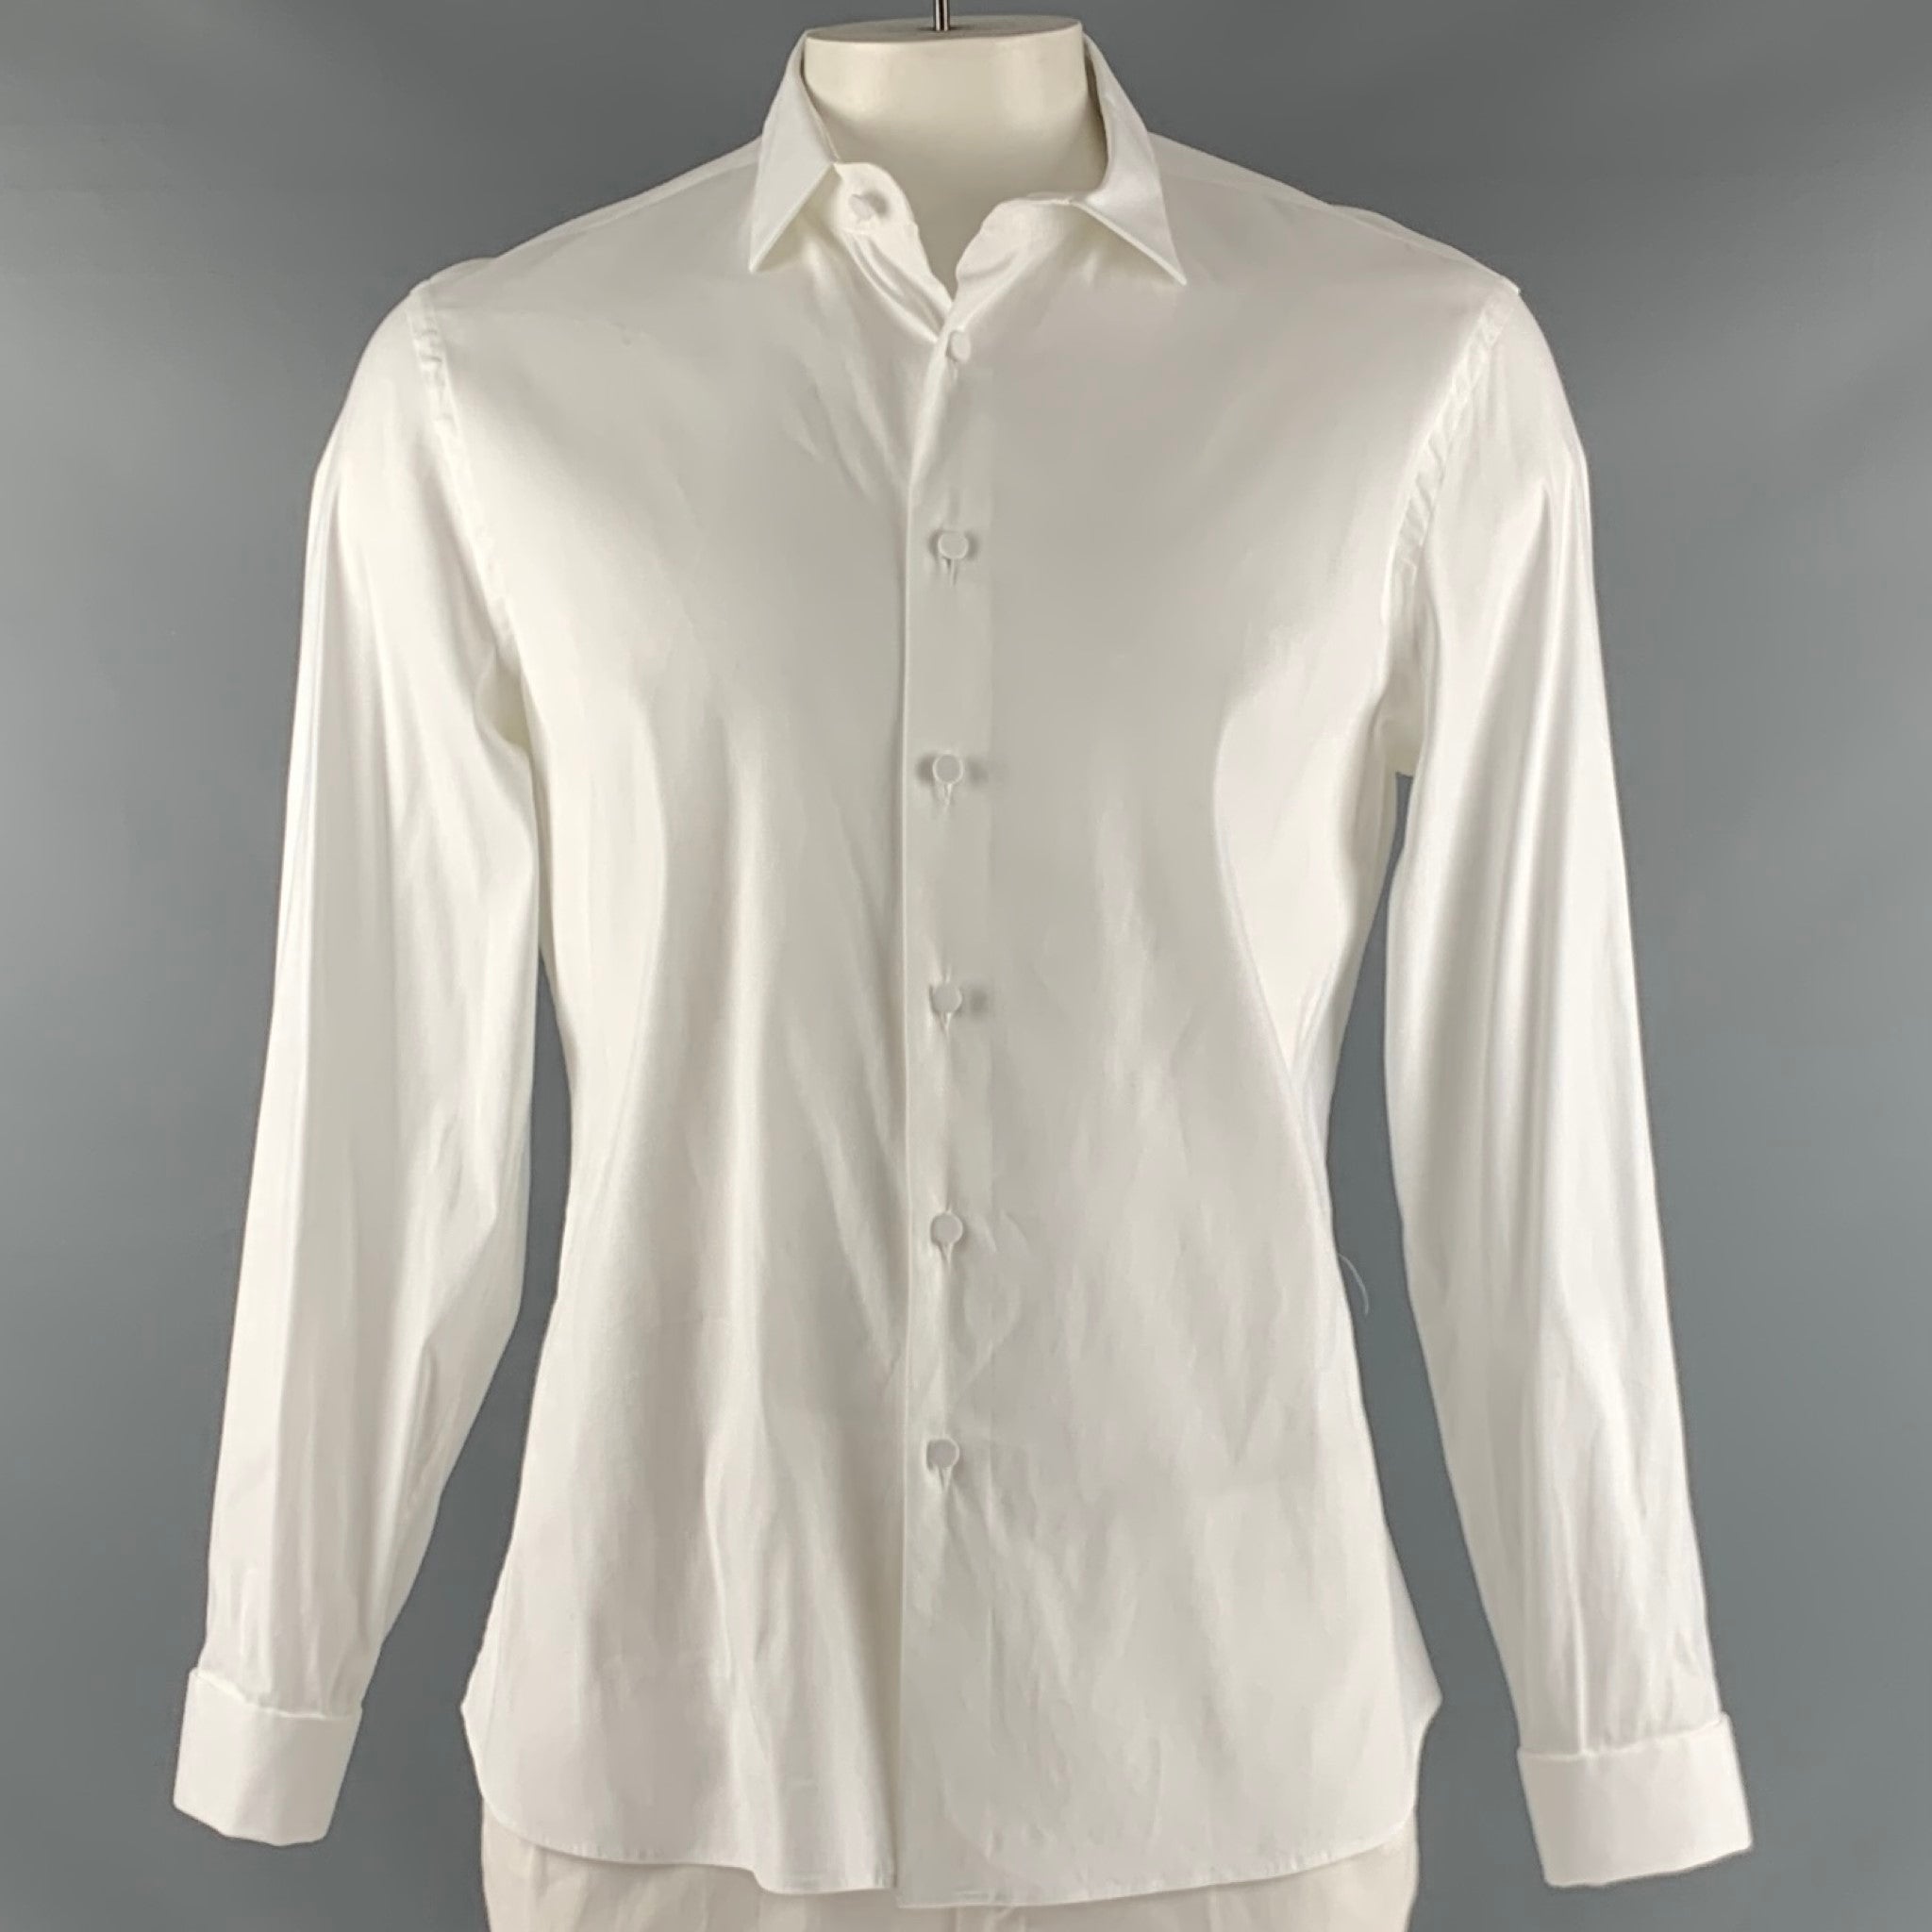 Prada long-sleeve cotton shirt - White